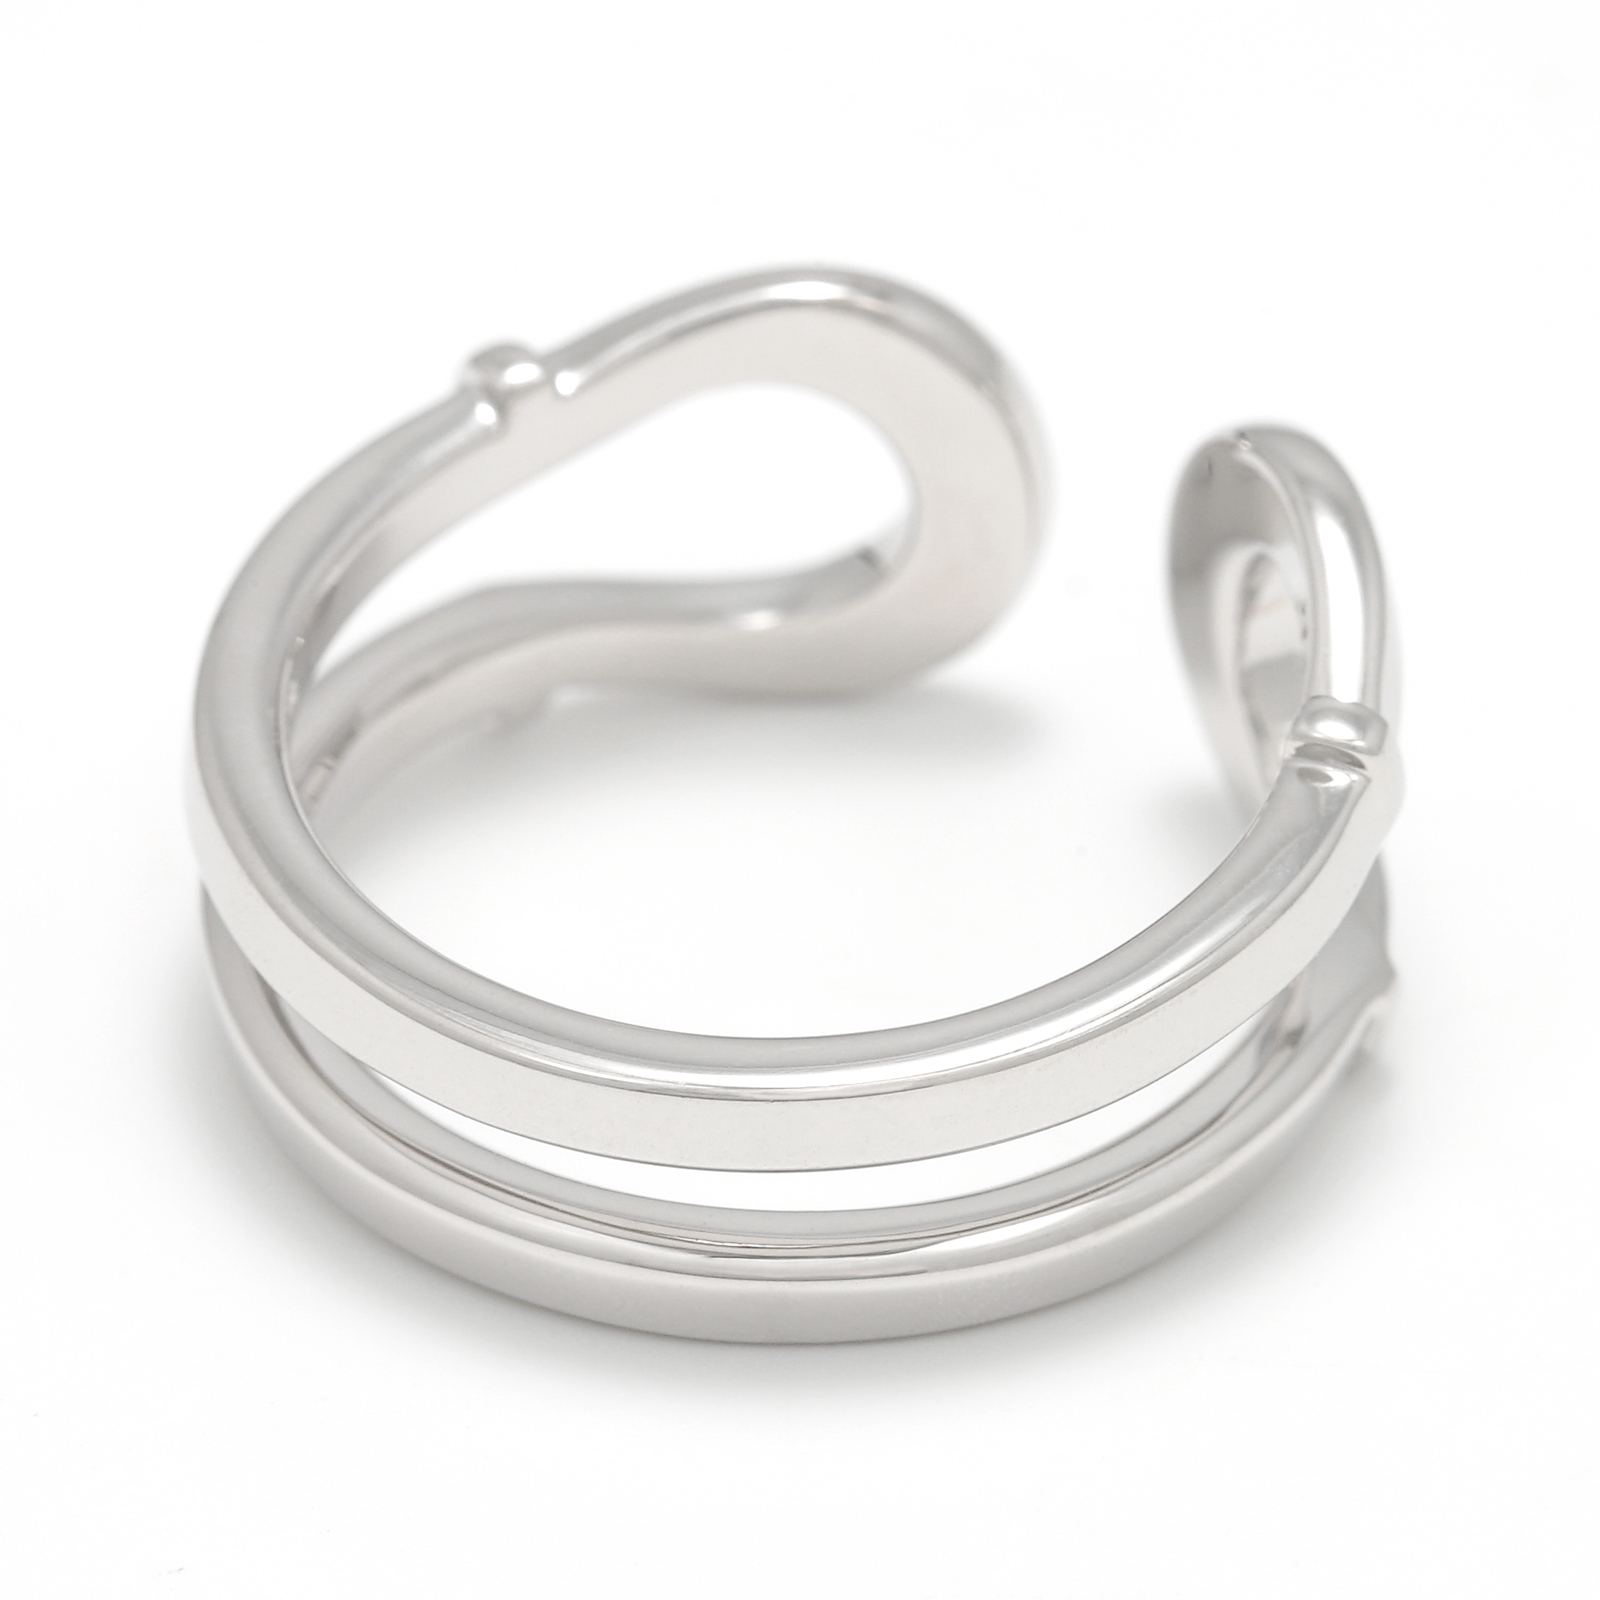 Double Horseshoe Ring - Silver